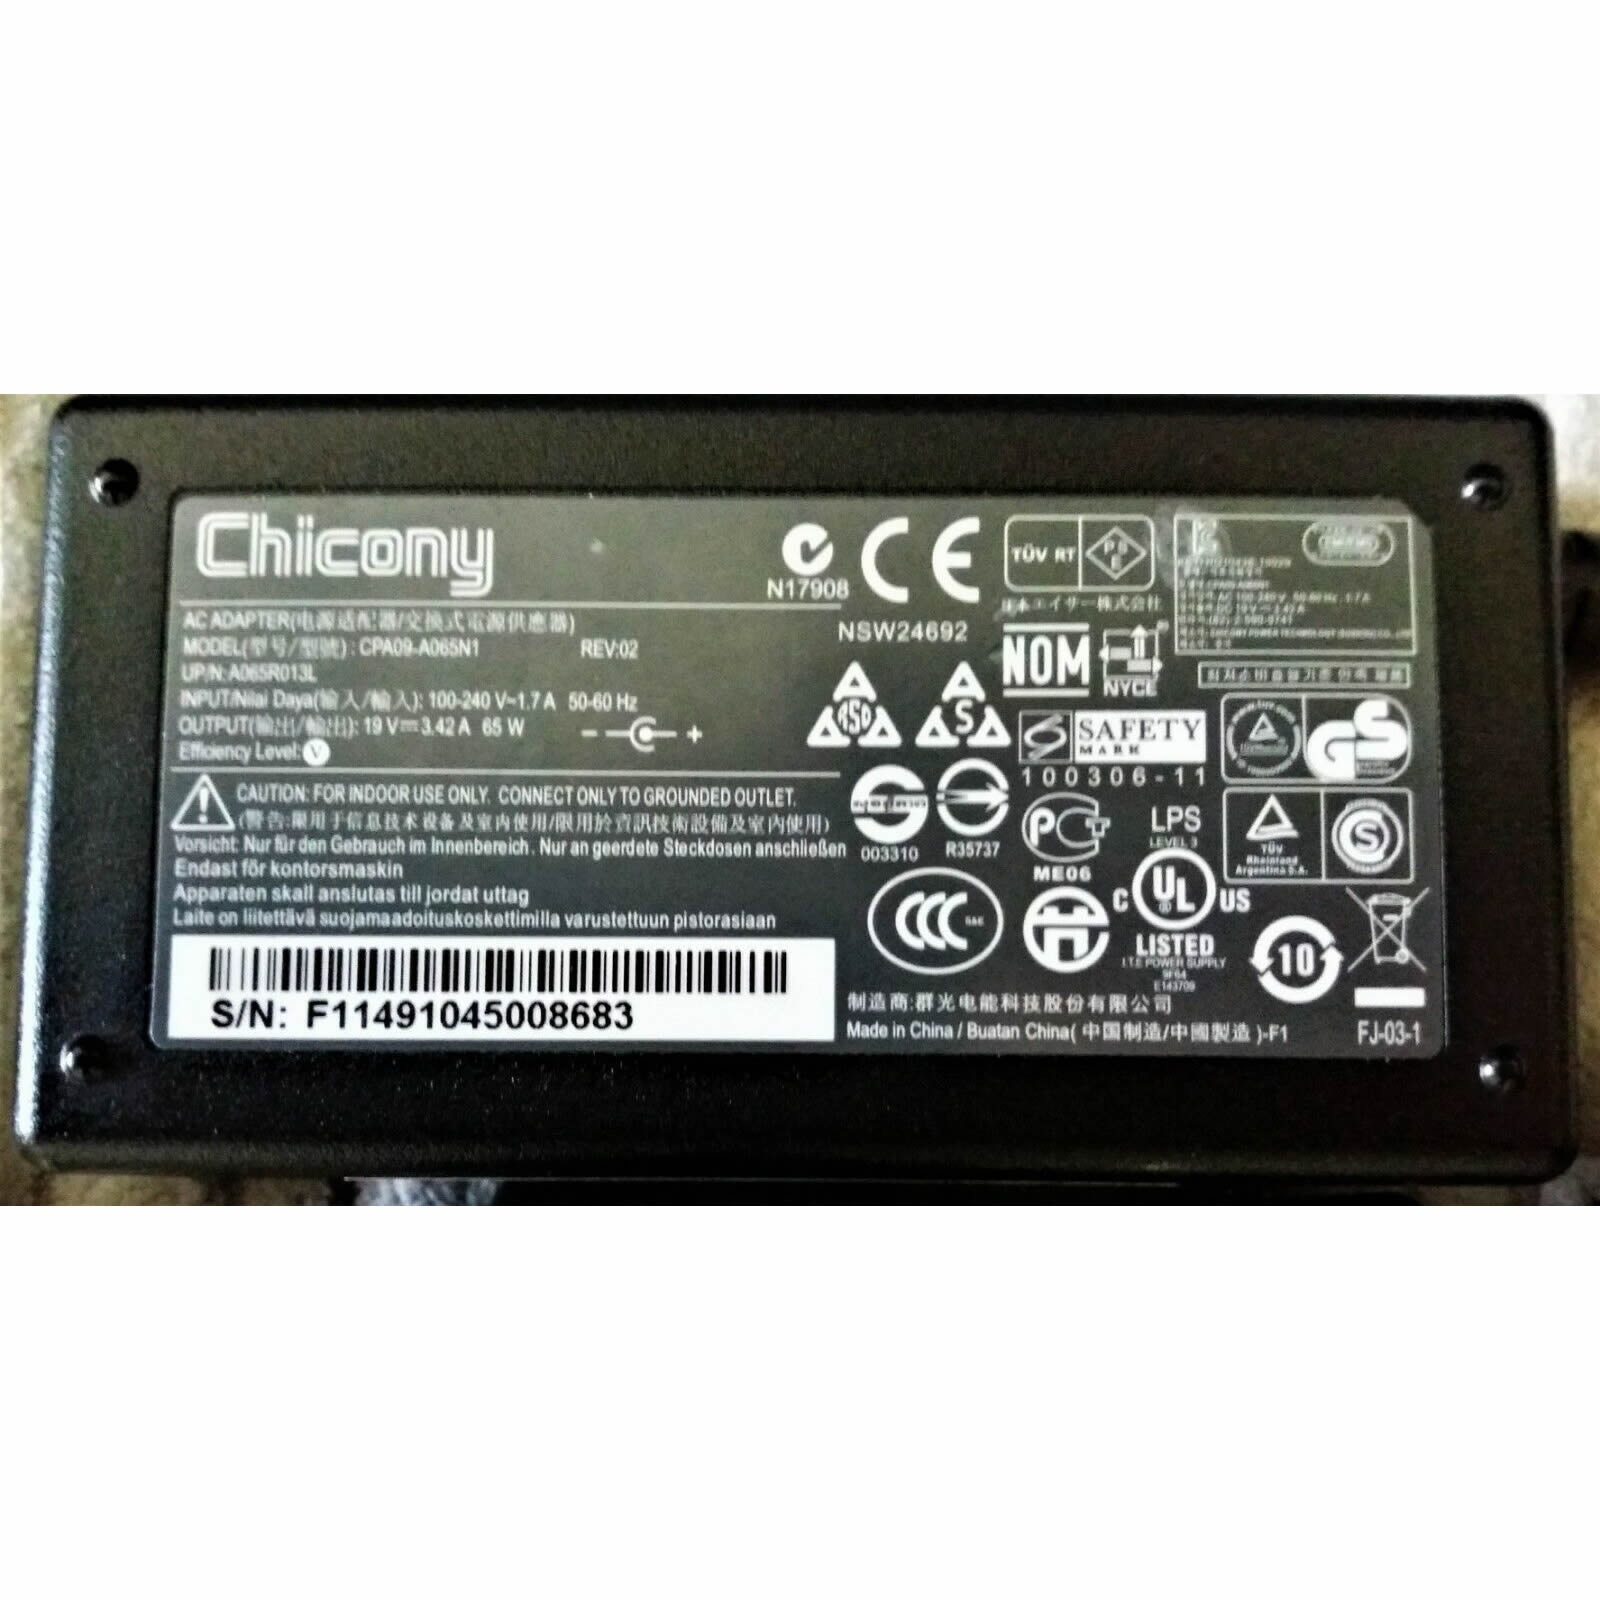 Chicony AC-OK065B13,ADP-65DB,ADP-65VH B adaptateur chargeur 19V 3.42A 65W alimentation originale pour Gateway MS2285 MD2614u MS2274 NV78 A11-065N1A CPA09-A065N1 séries